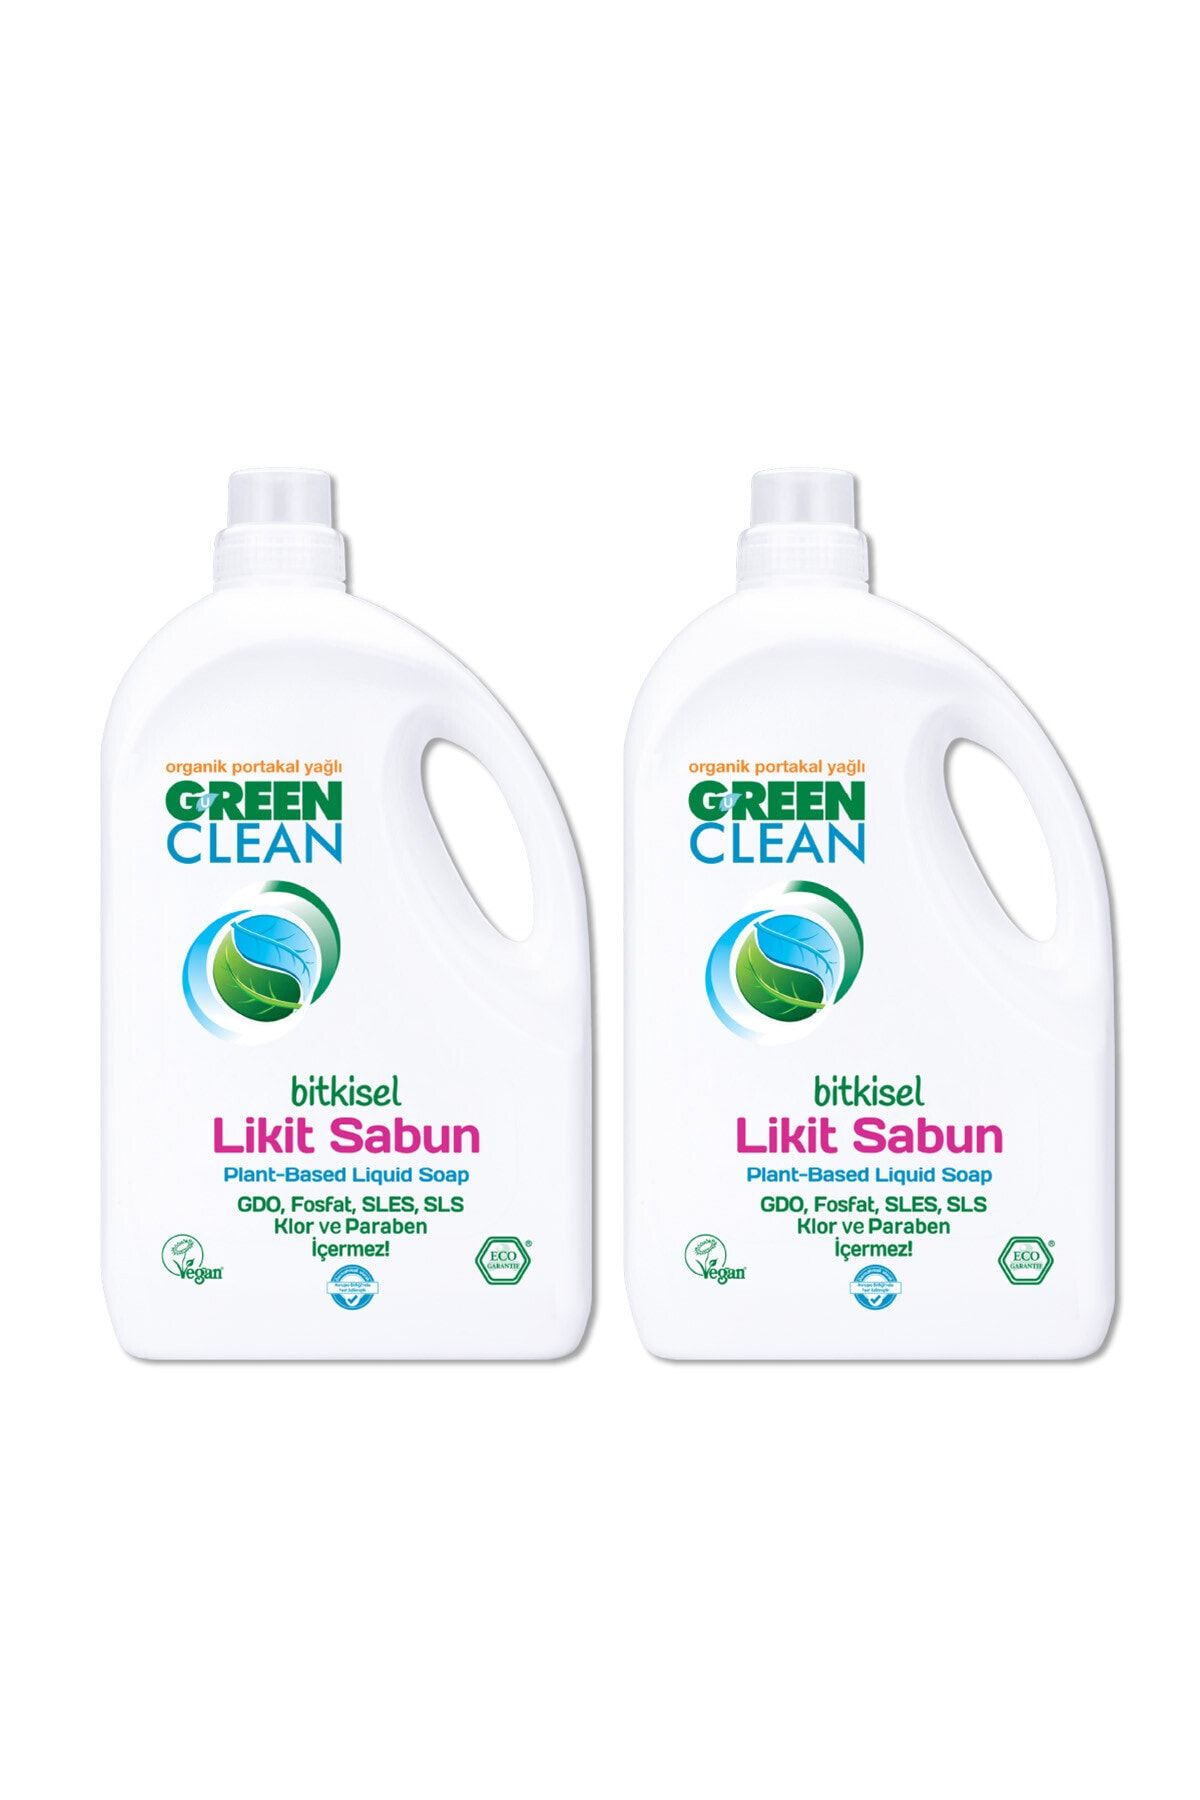 Green Clean Organik Portakal Yağlı Bitkisel Likit El Sabunu 2,75 lt 2'li